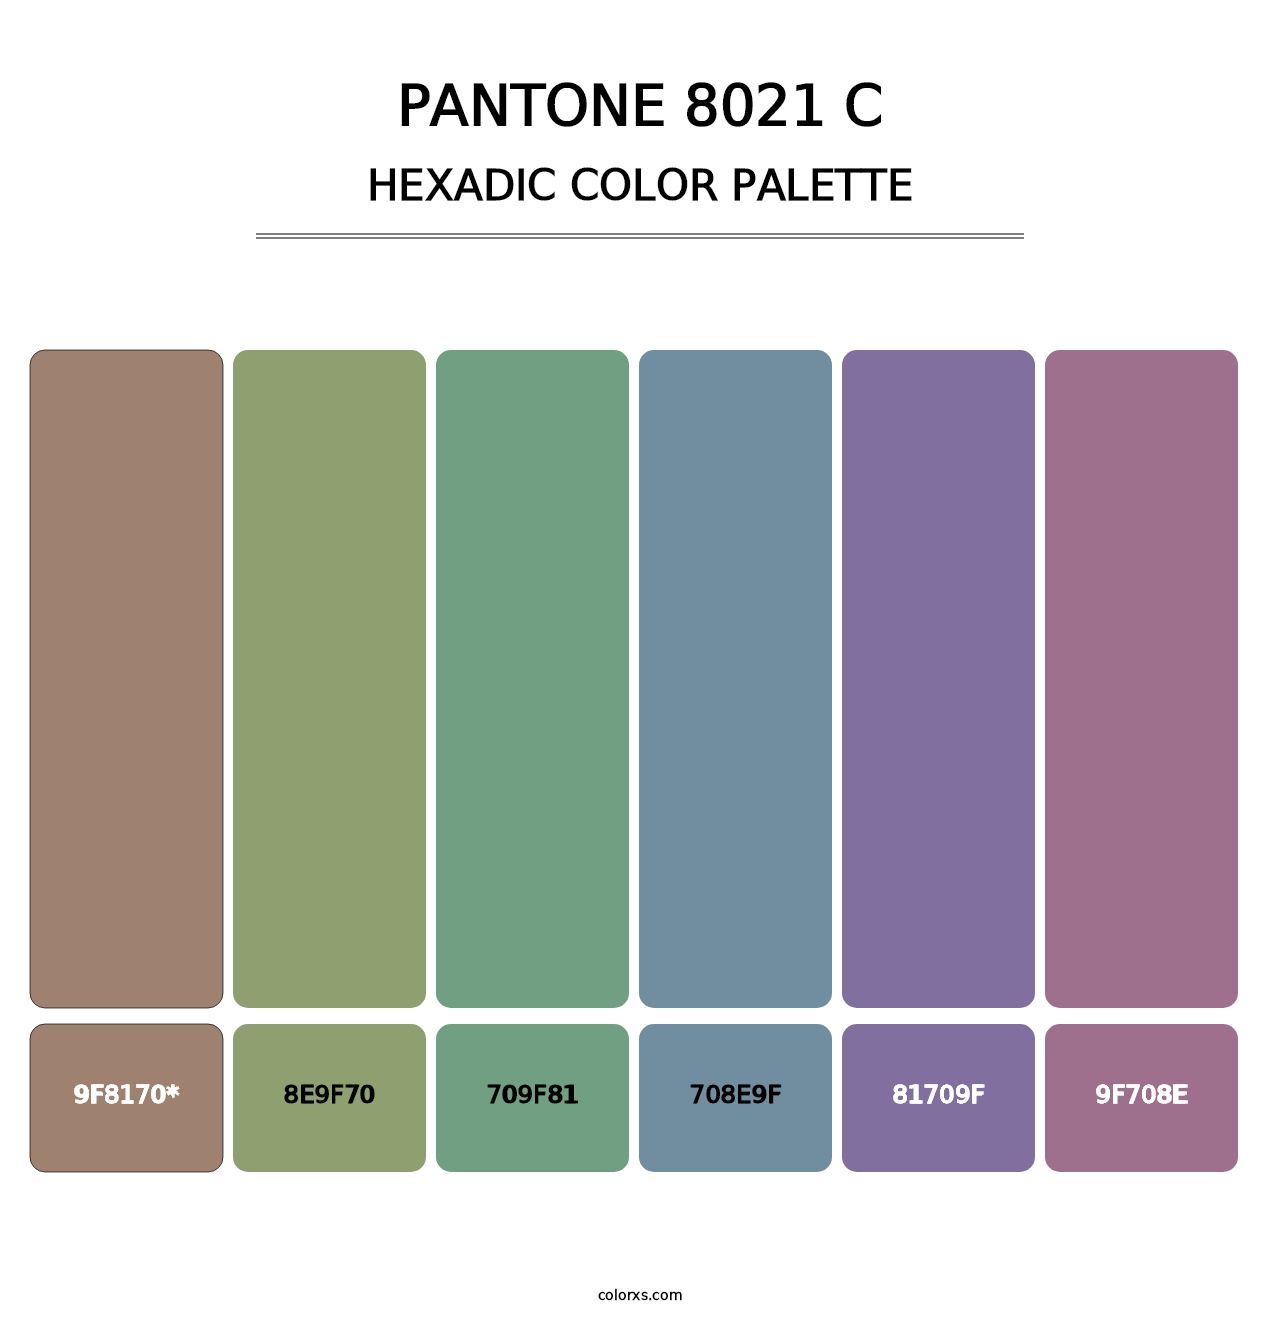 PANTONE 8021 C - Hexadic Color Palette